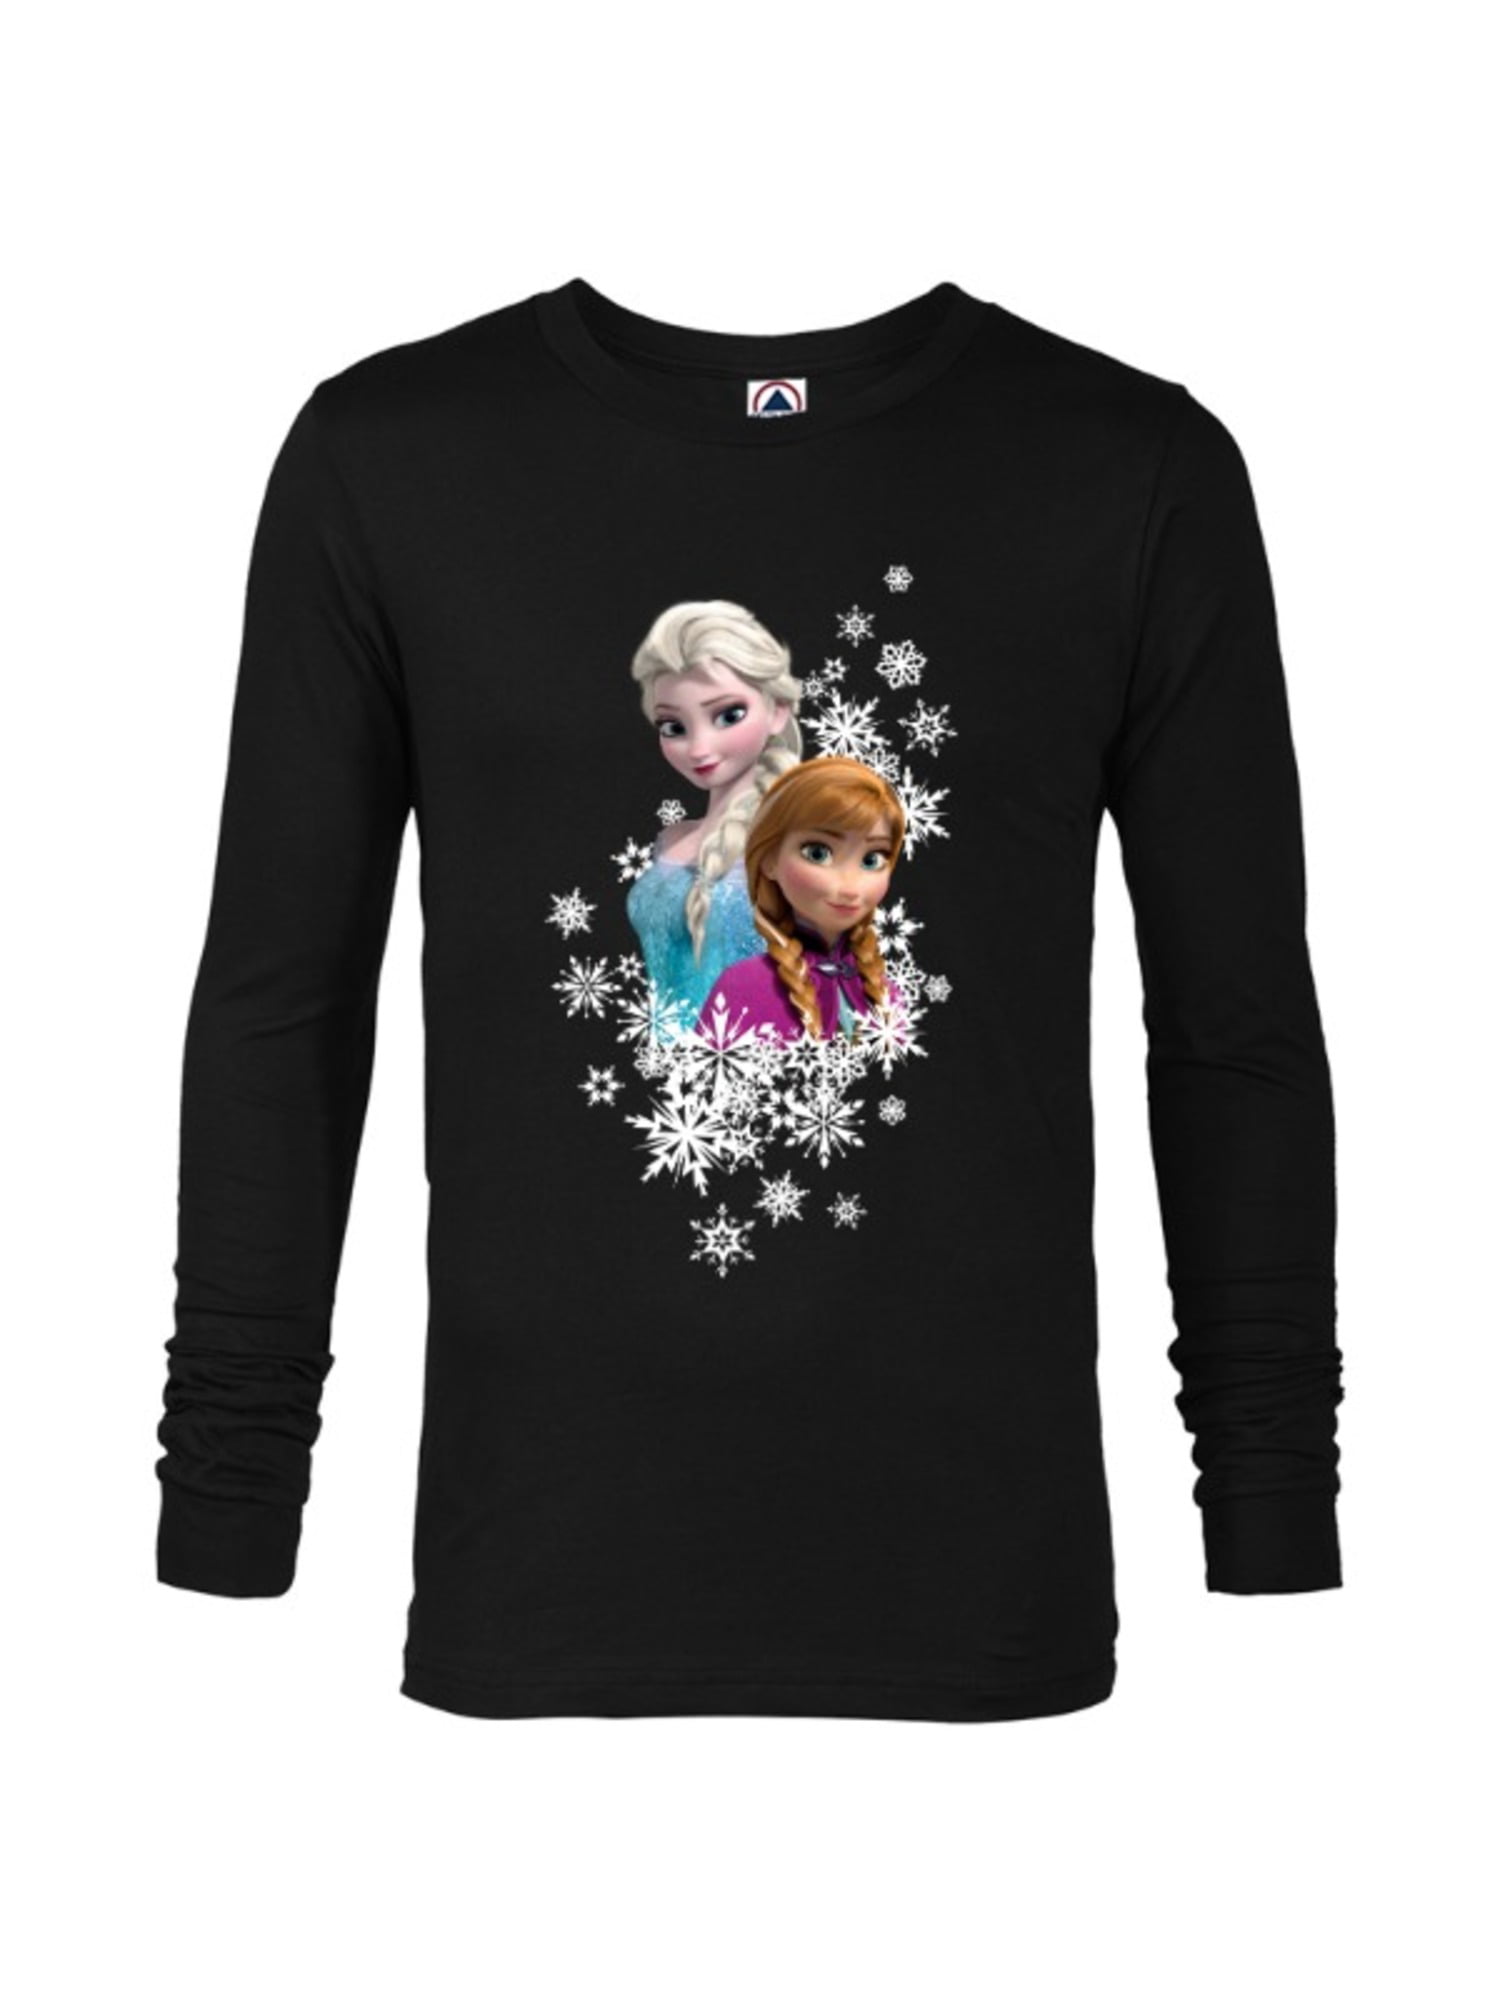 Disney Frozen ELSA Snowflake Long Sleeve Graphic Tee T-Shirt Top For Girls-NEW 